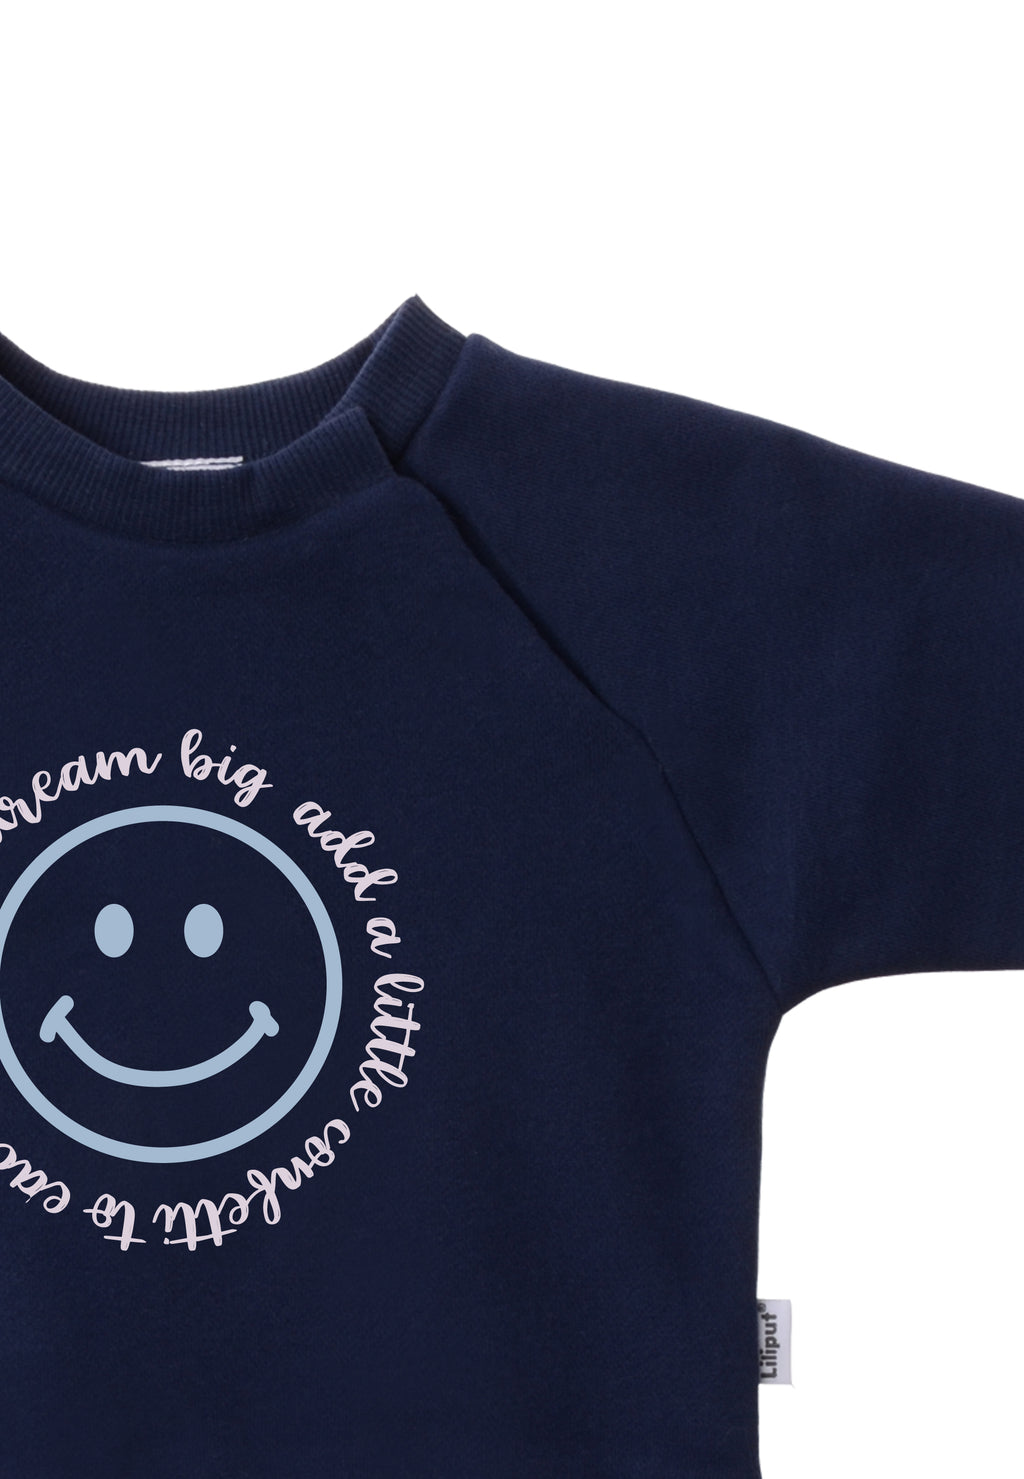 Sweatshirt in blau mit Smiley Print und Wording "add a little confetti to each day and dream big"